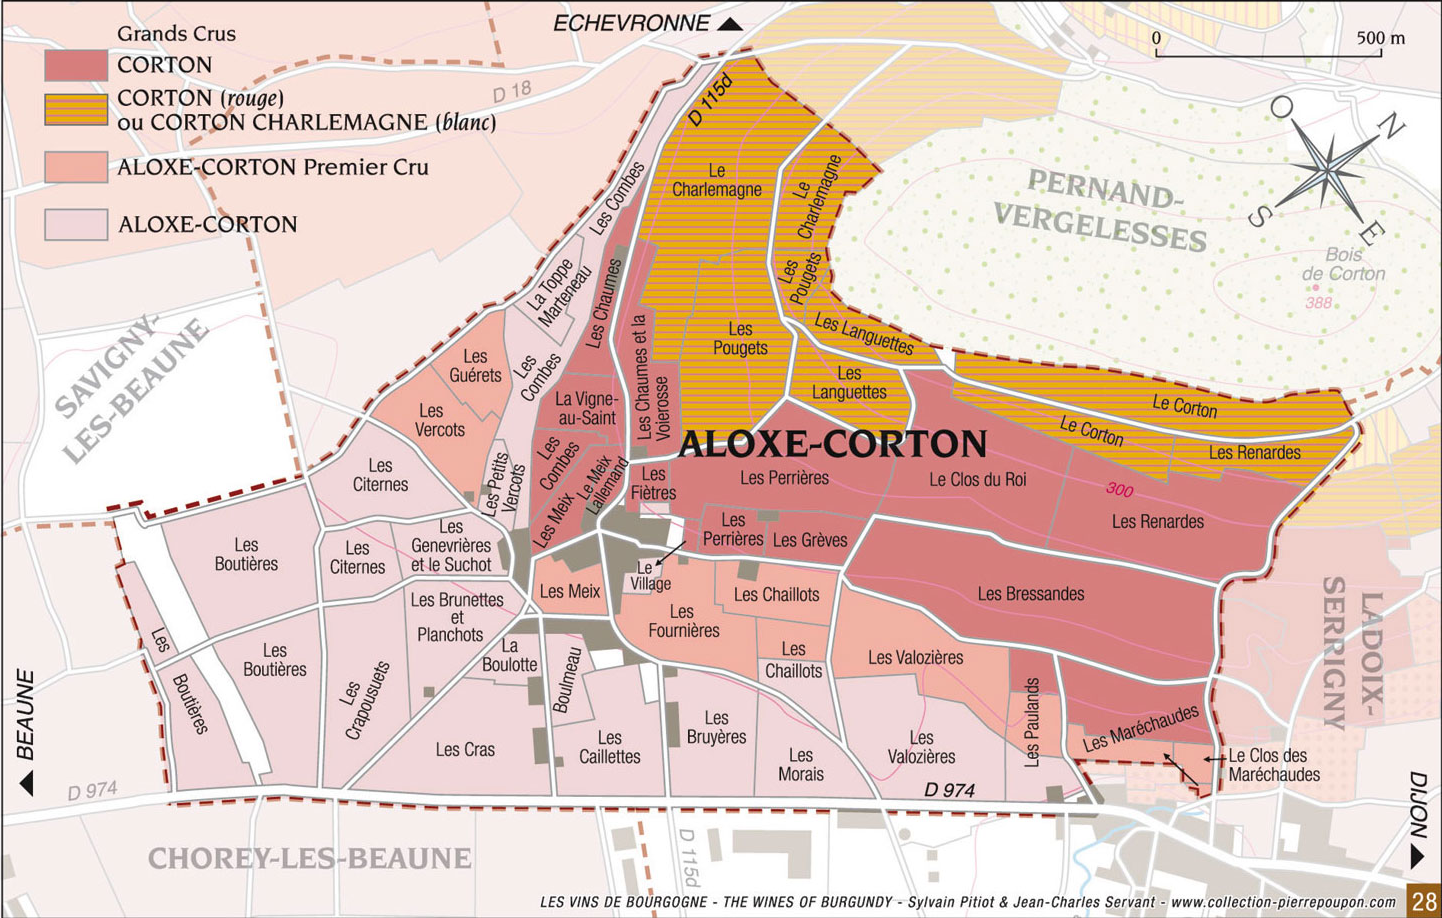 map of aloxe-corton wine region of burgundy